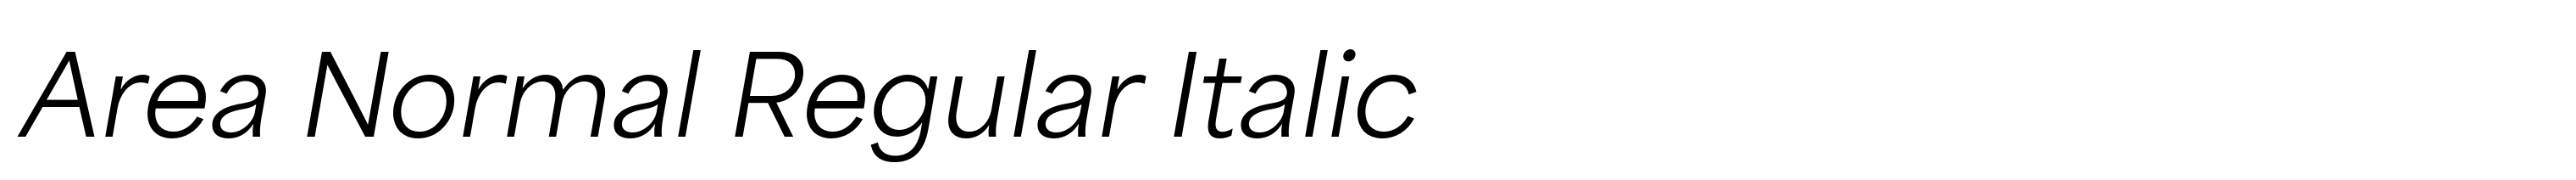 Area Normal Regular Italic